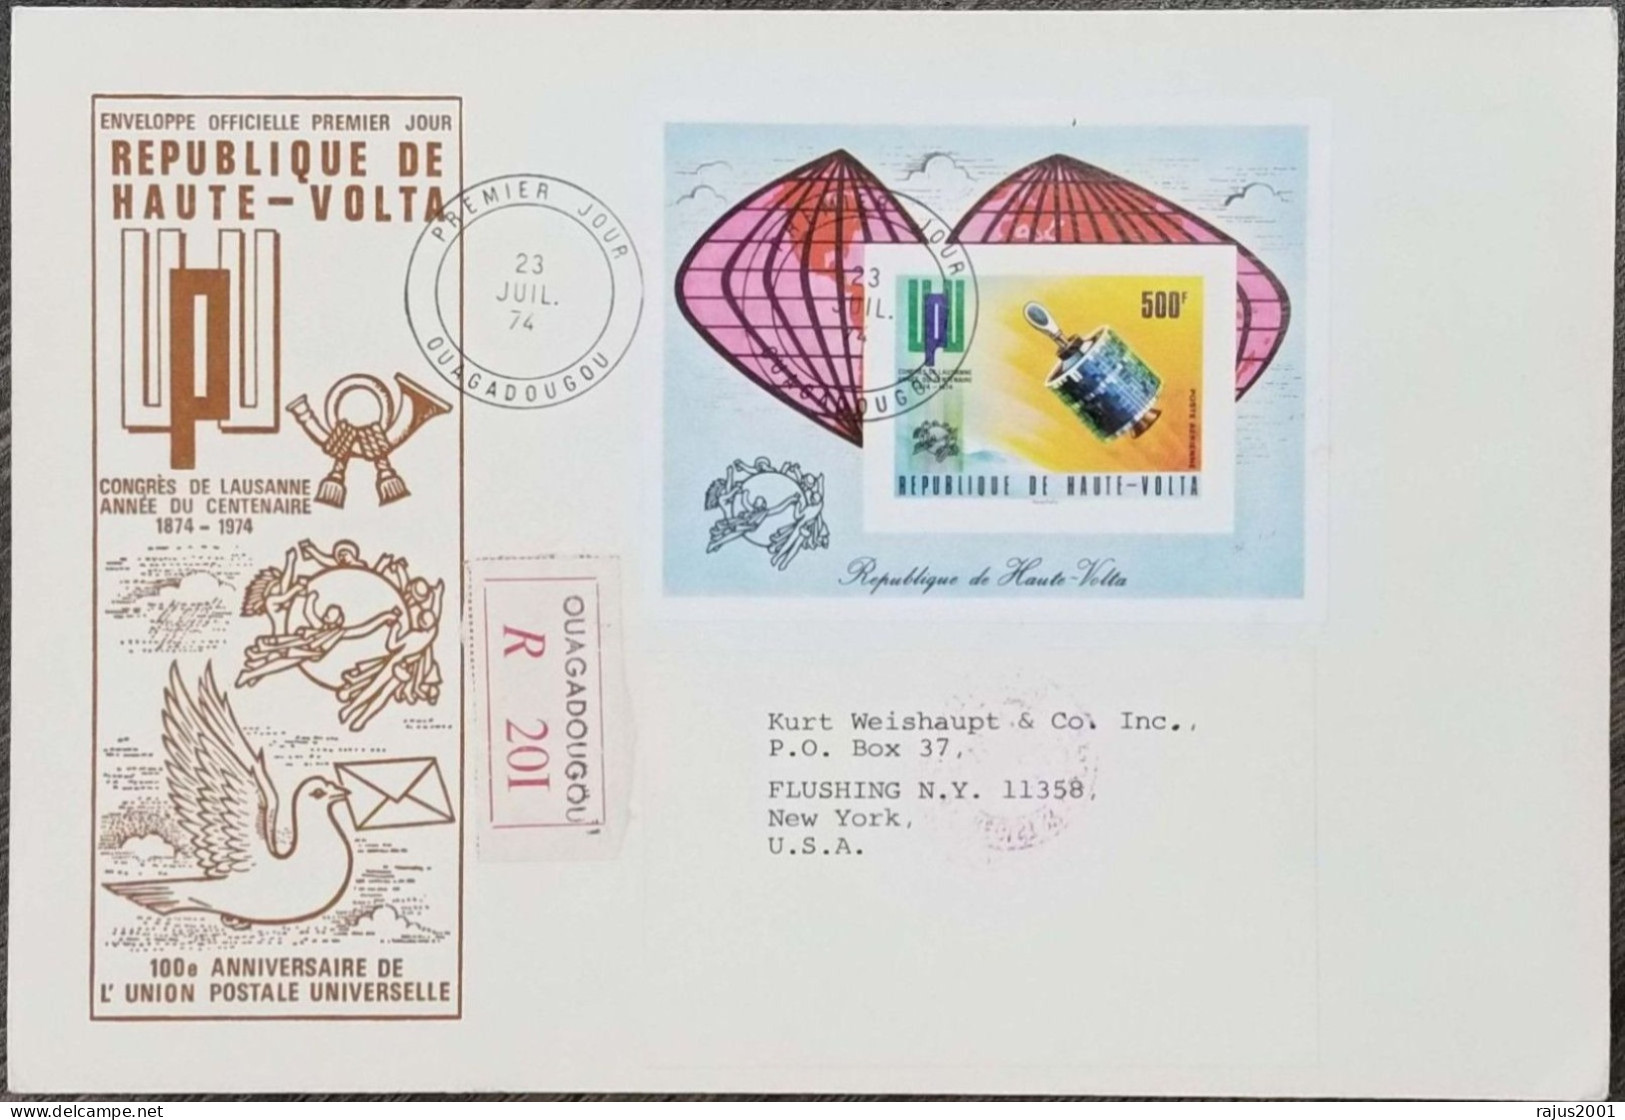 Centenary Of Universal Union Postal, U.P.U, UPU, Satellite, IMPERF MS Circulated Registered Cover FDC 1974 Upper Volta - UPU (Universal Postal Union)